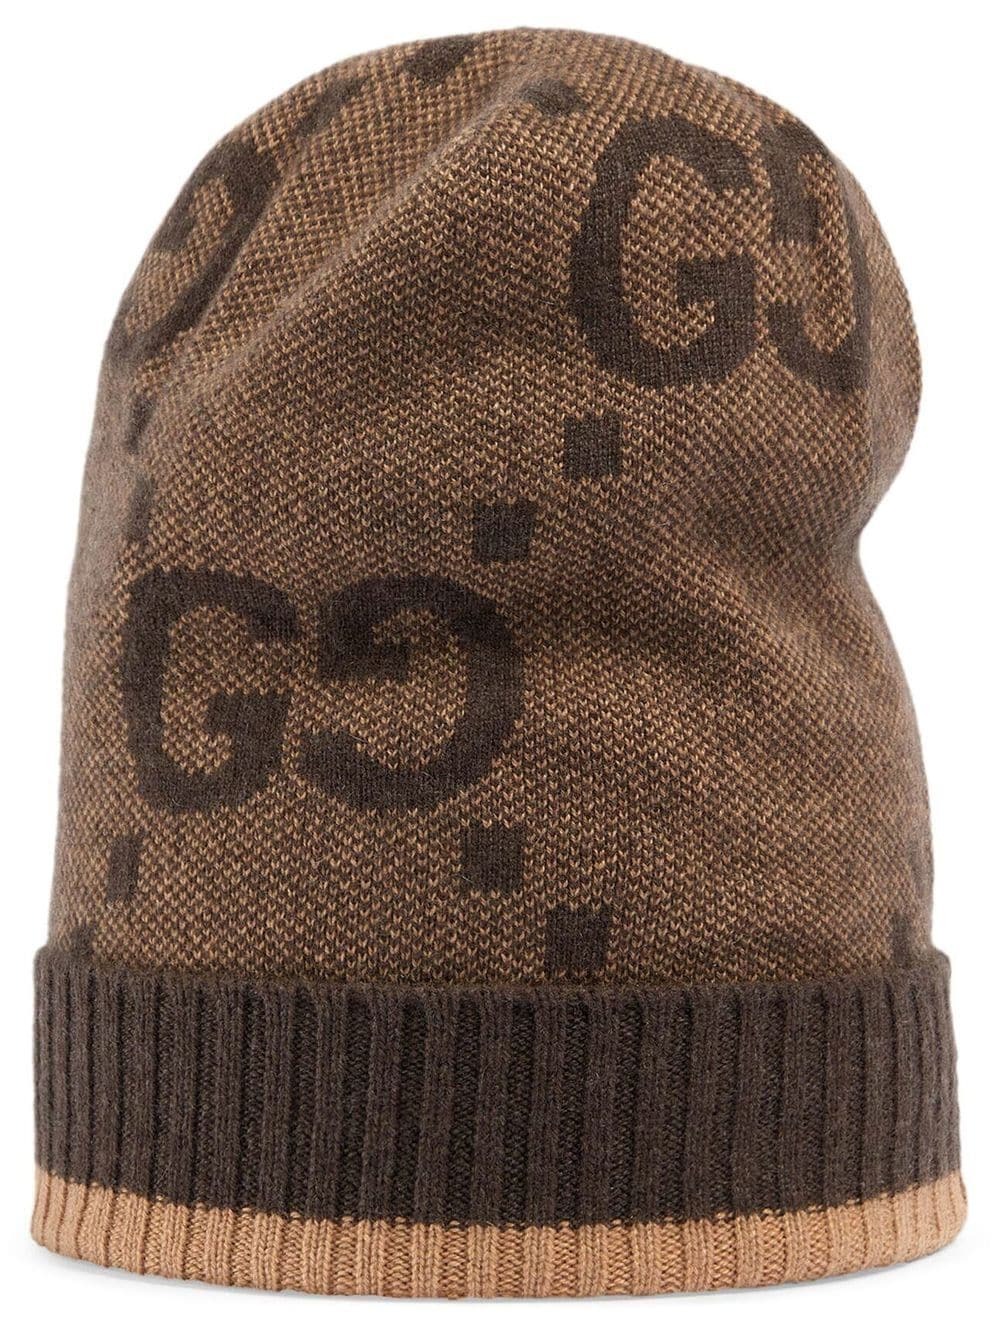 GG cashmere hat